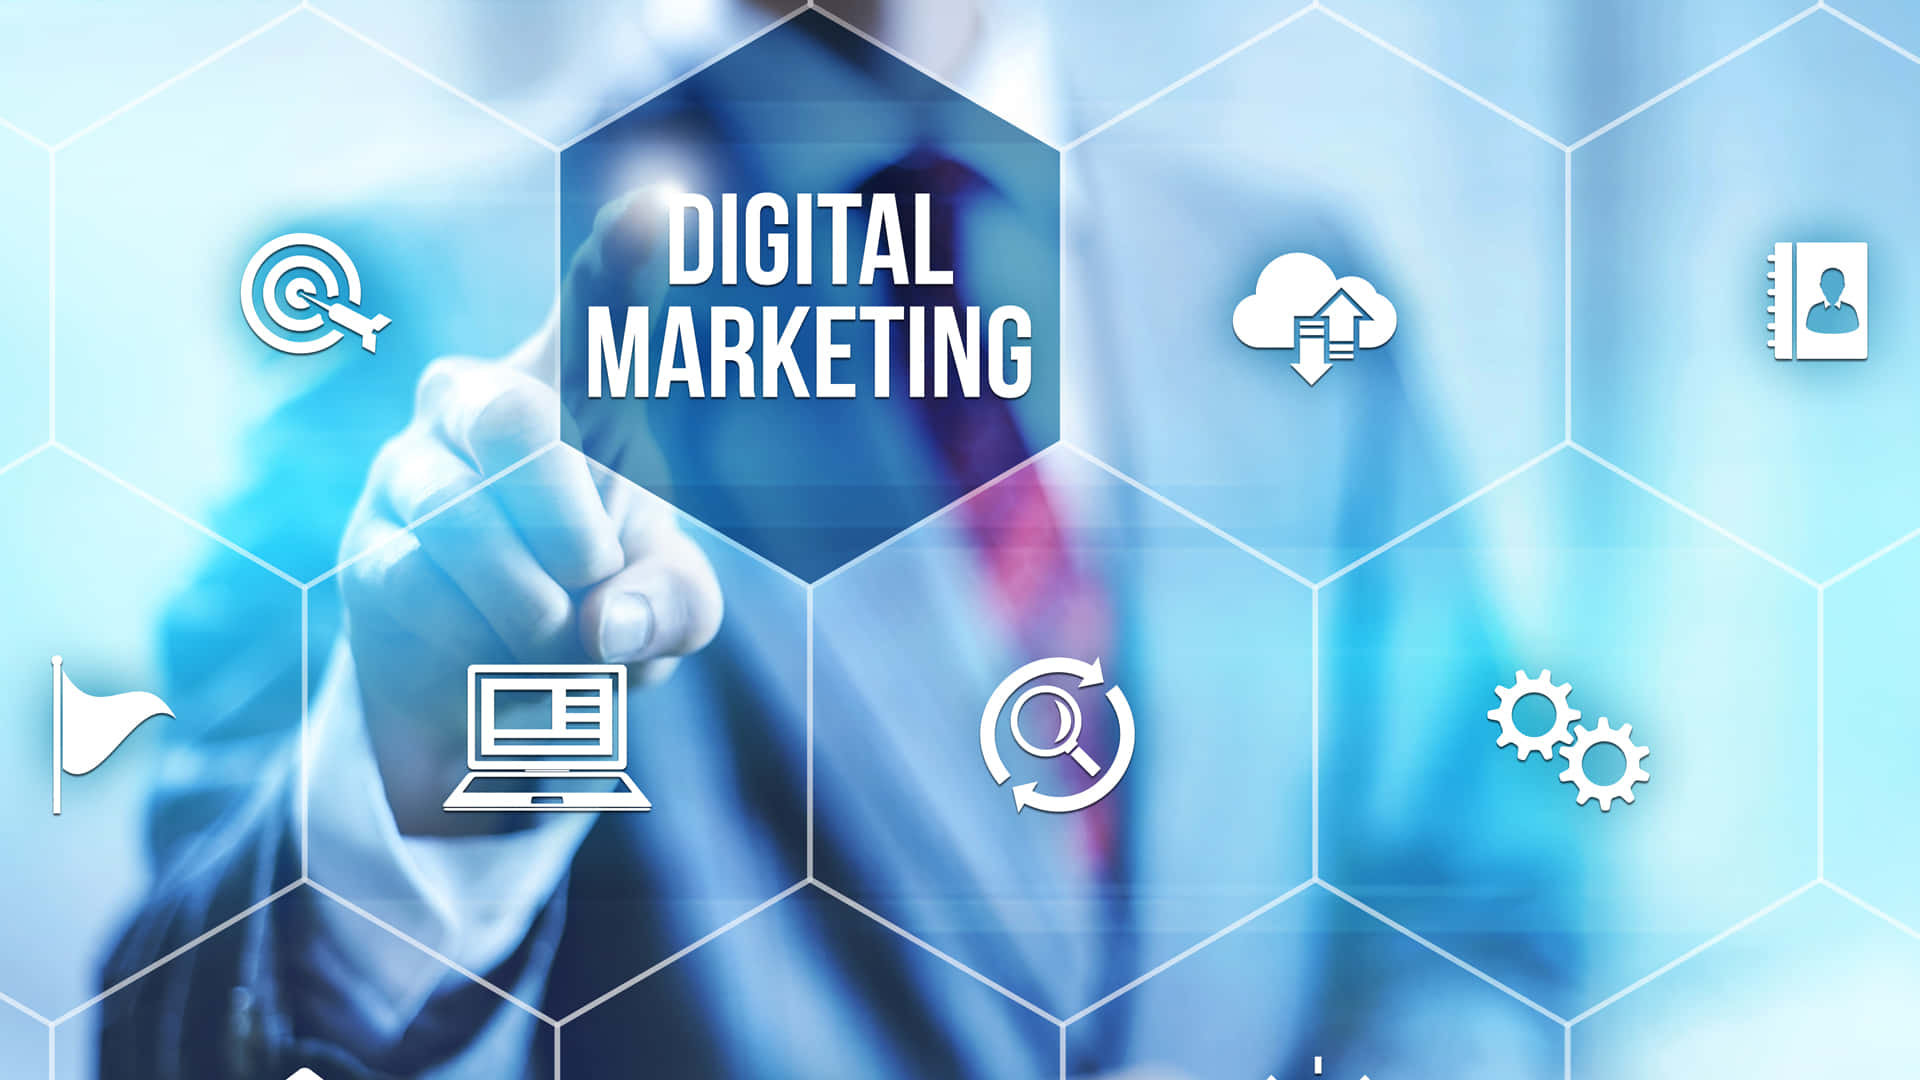 Digital Marketing - What Is It? Wallpaper